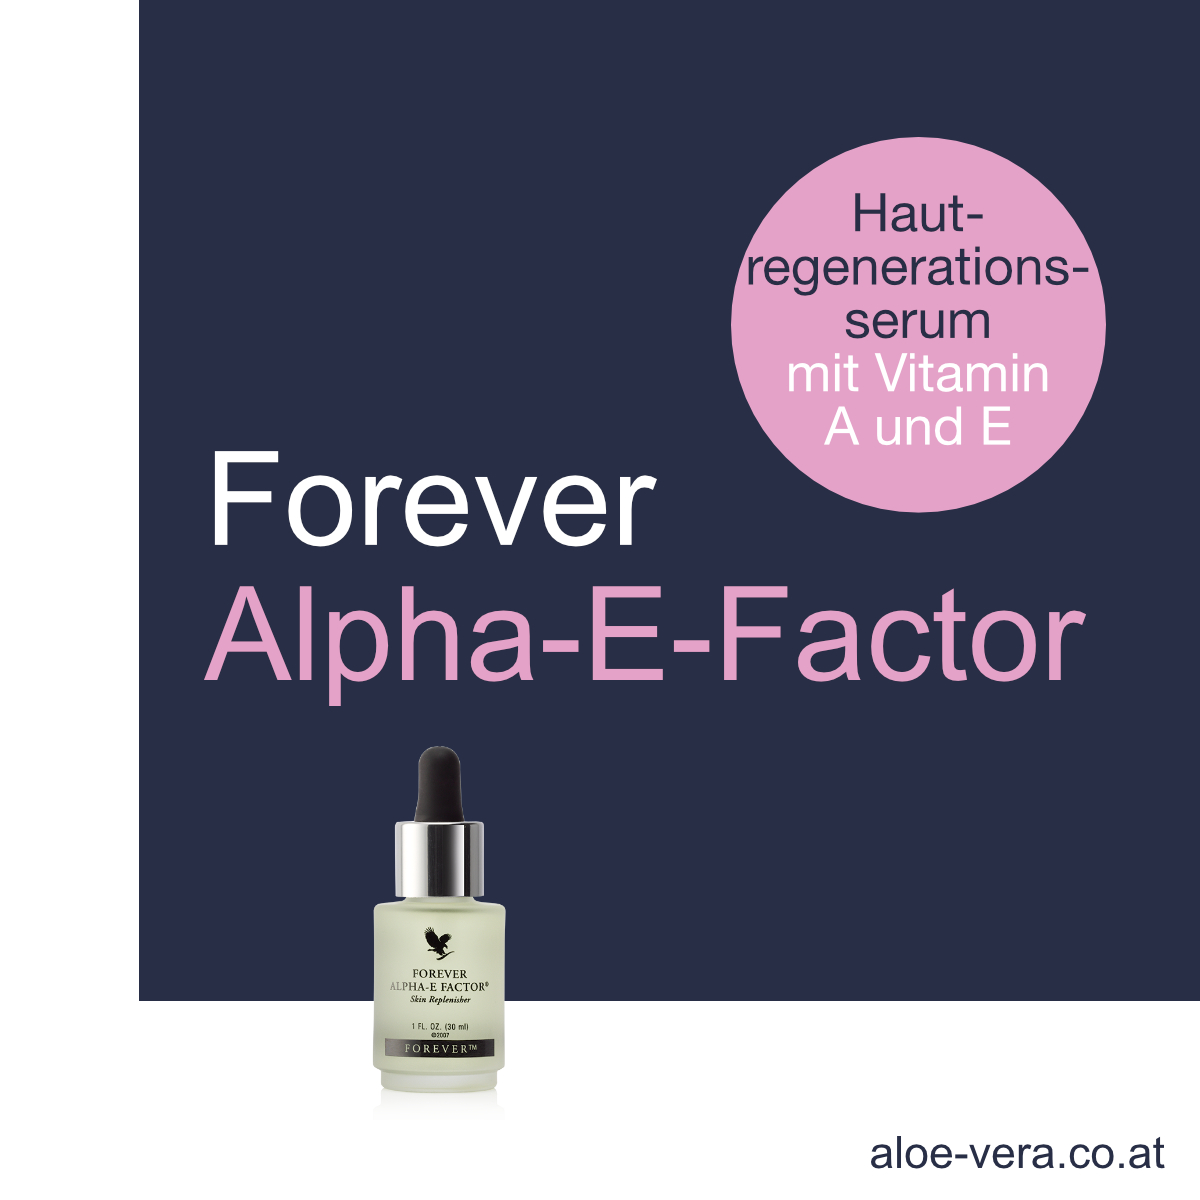 Forever Alpha-E-Factor Aloe Vera Hautregeneration Serum Vitamin A Vitamin E kaufen